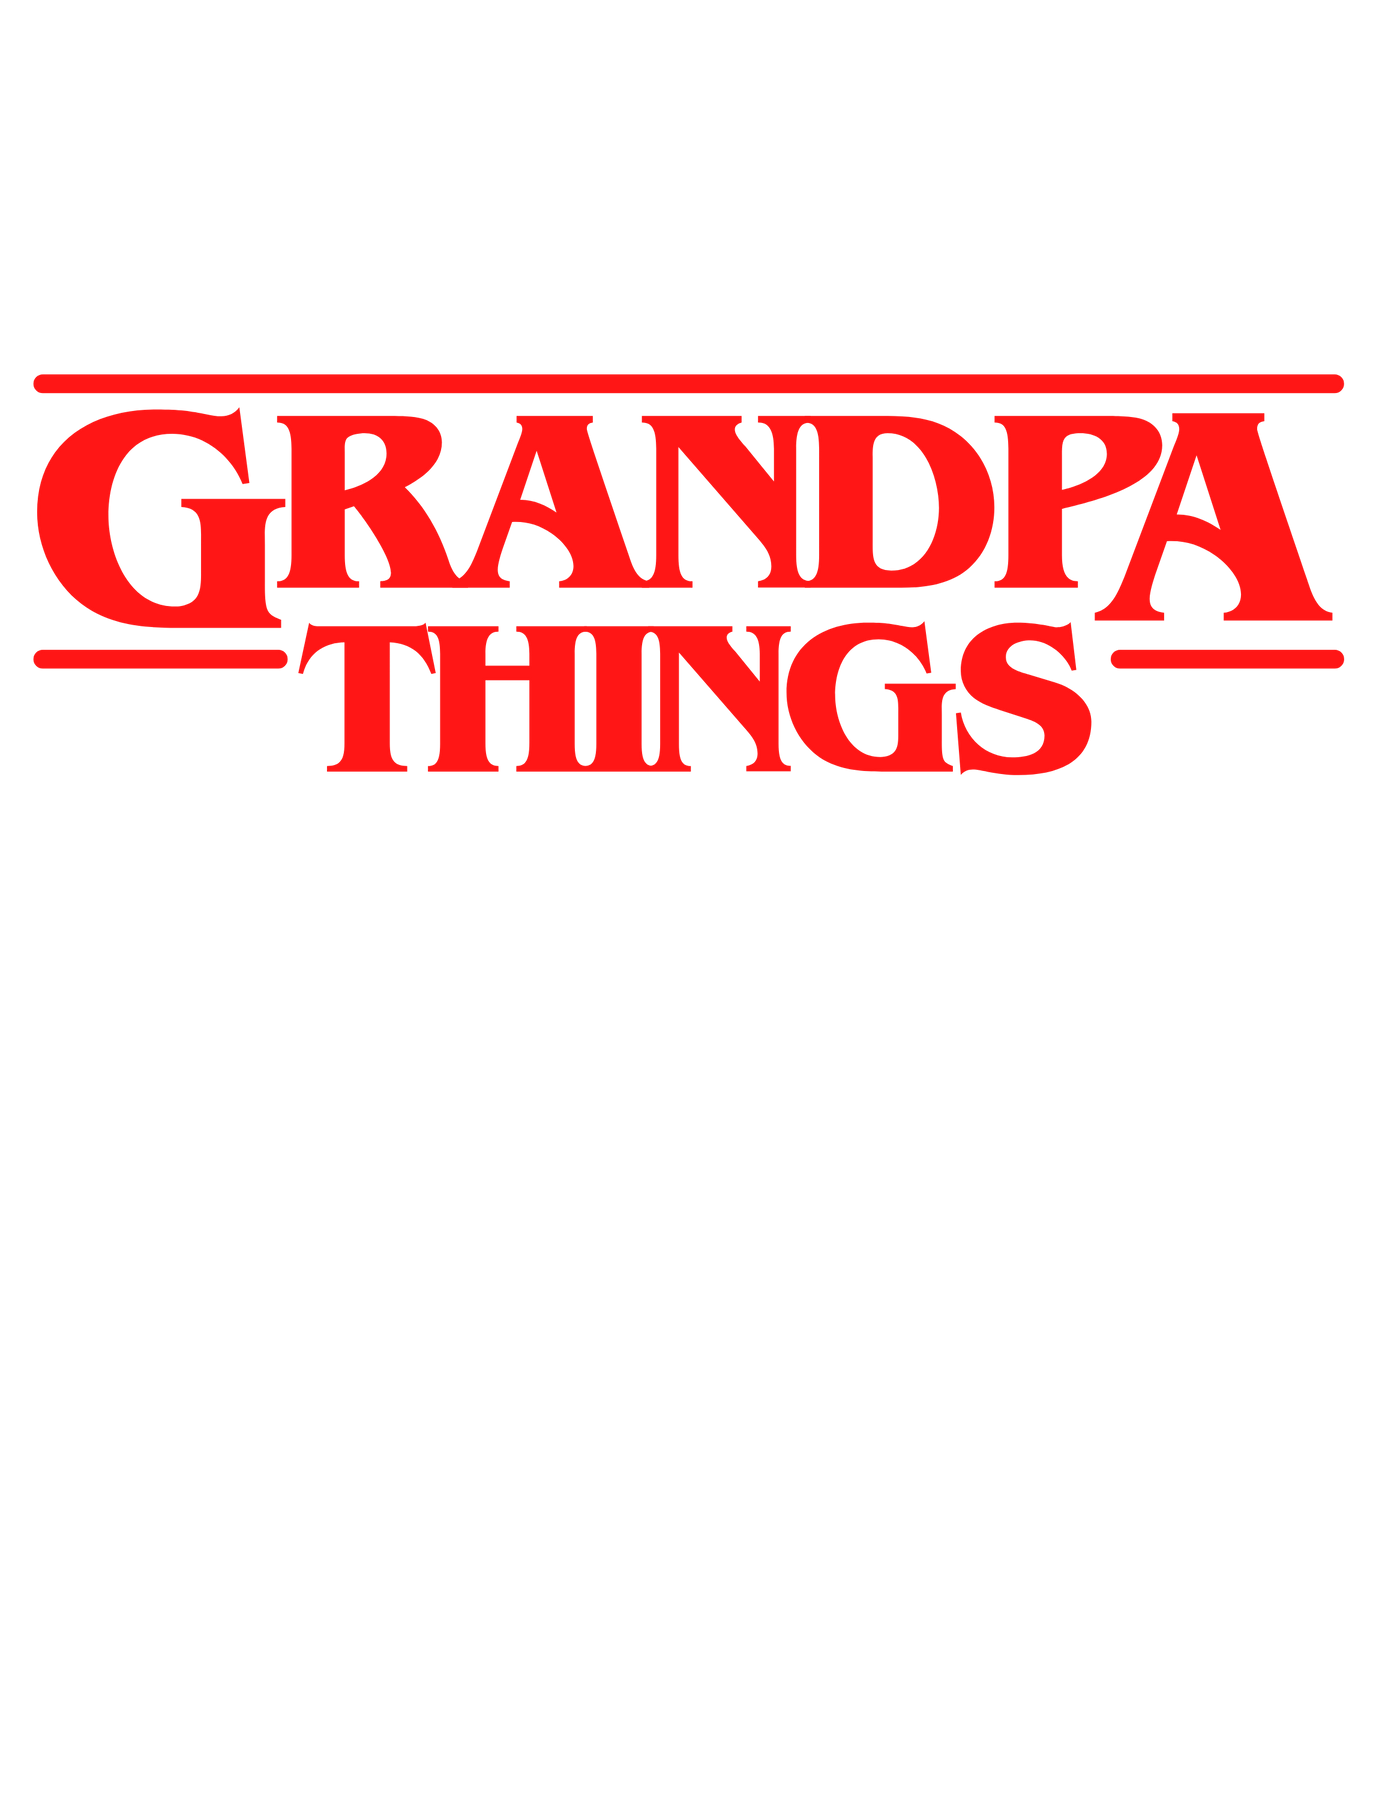 GRANDPA THINGS